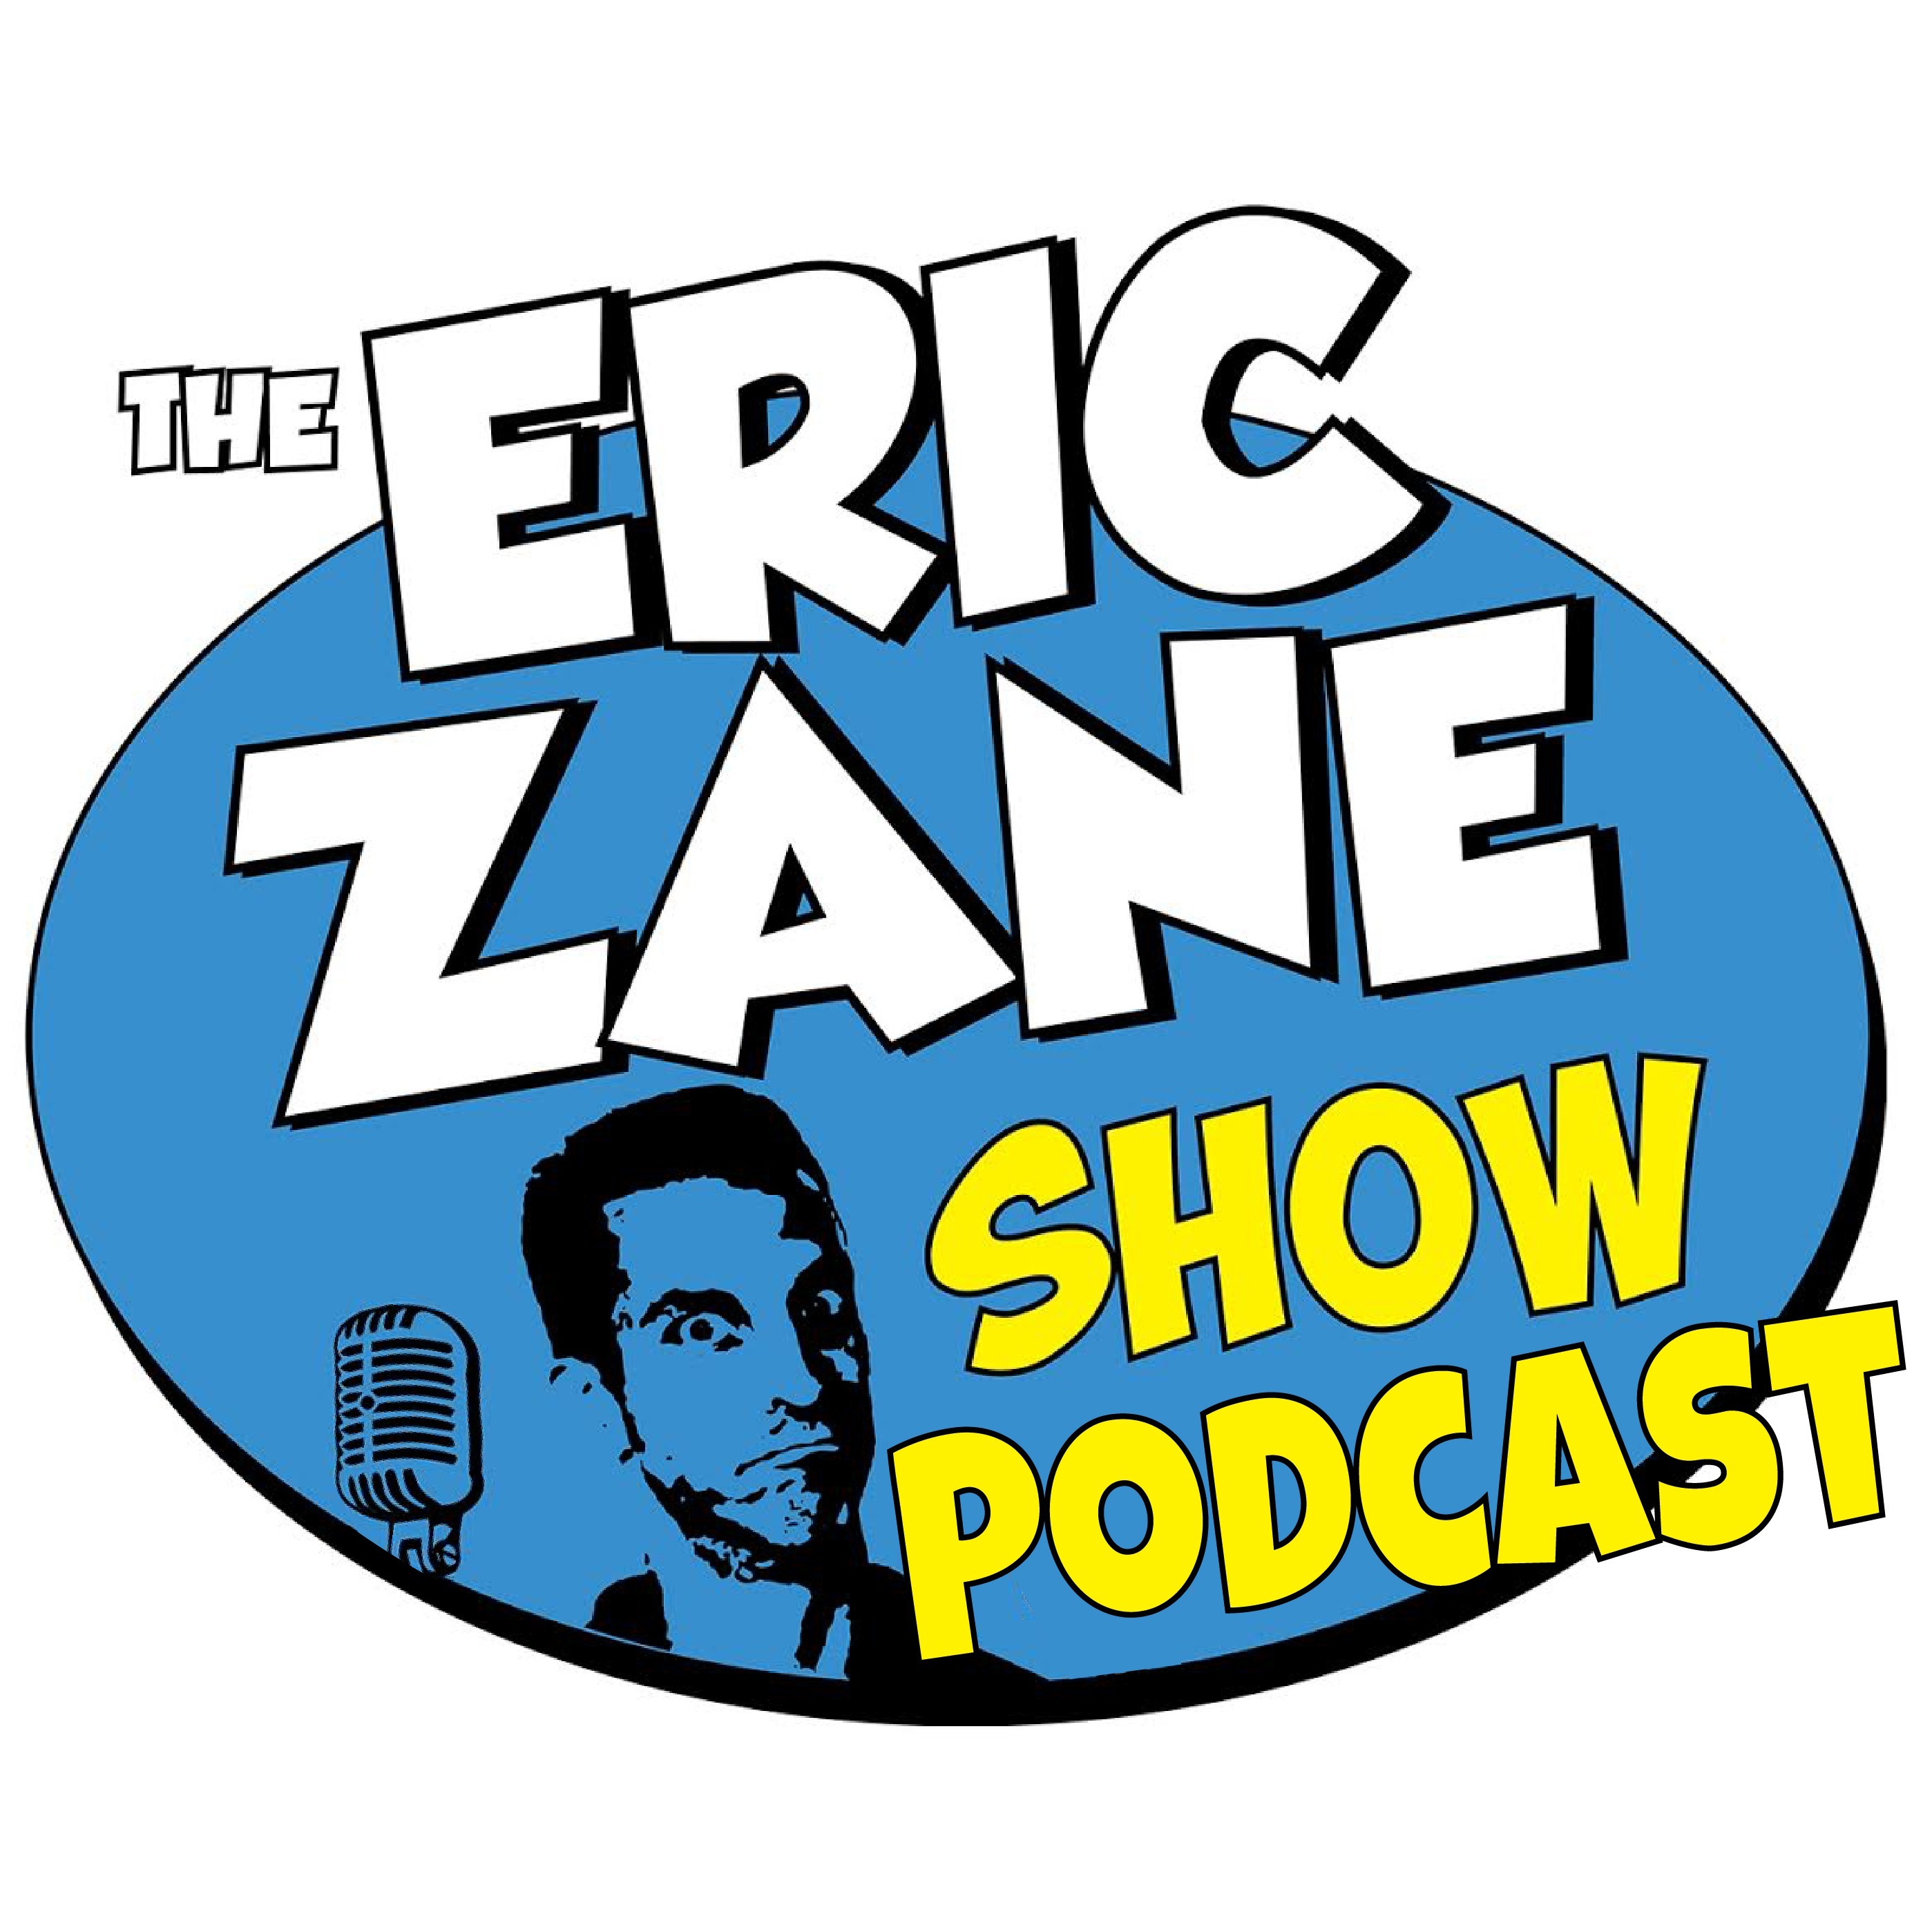 Eric Zane Show Podcast 1029 - Daisy